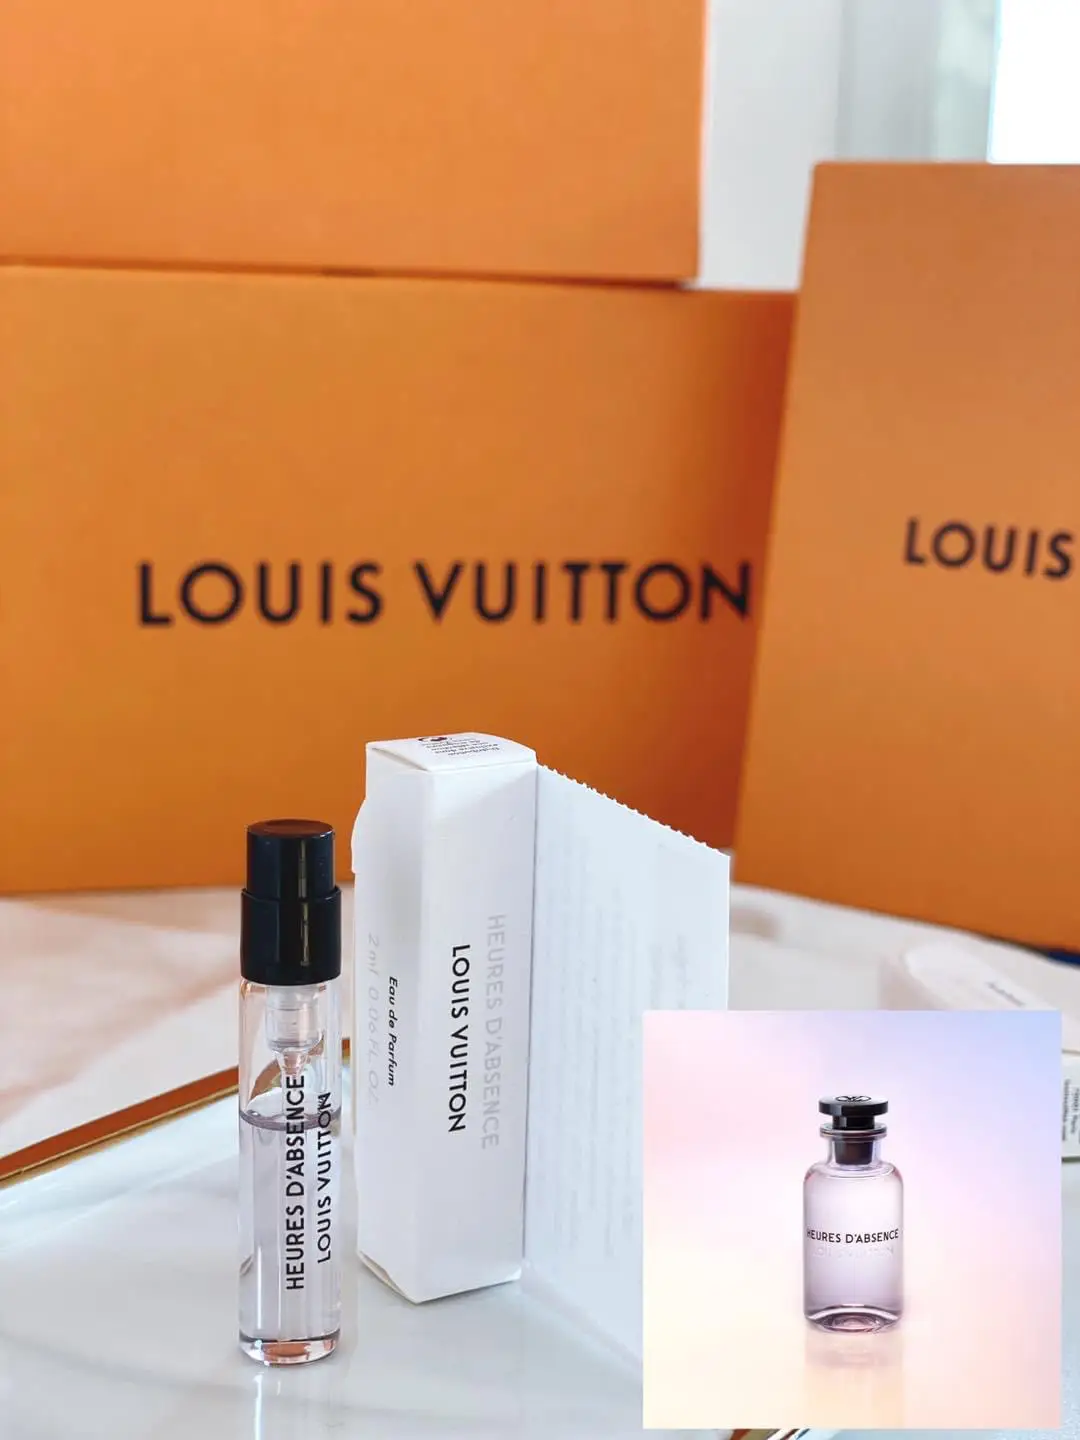 New Louis Vuitton Heures D'absence Parfum Perfume Mini Sample